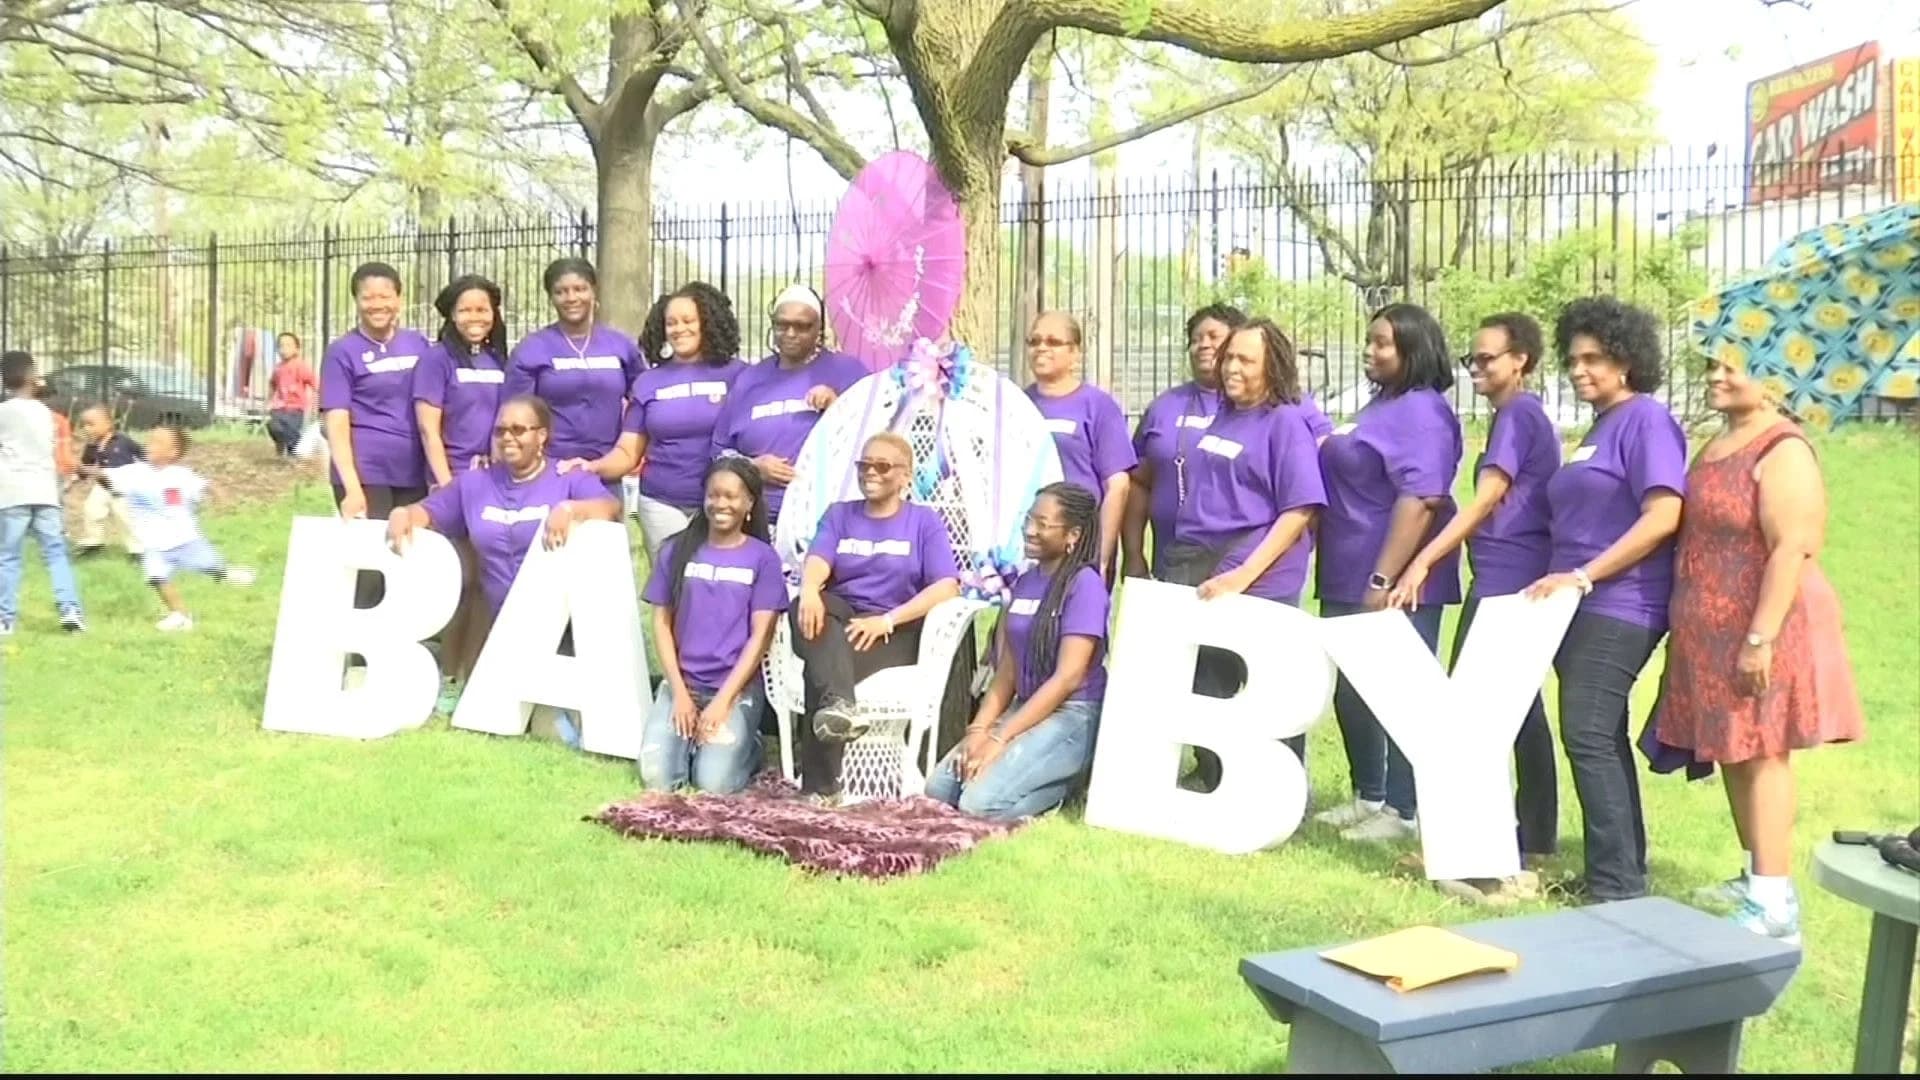 Expecting moms attend massive baby shower in E. Flatbush